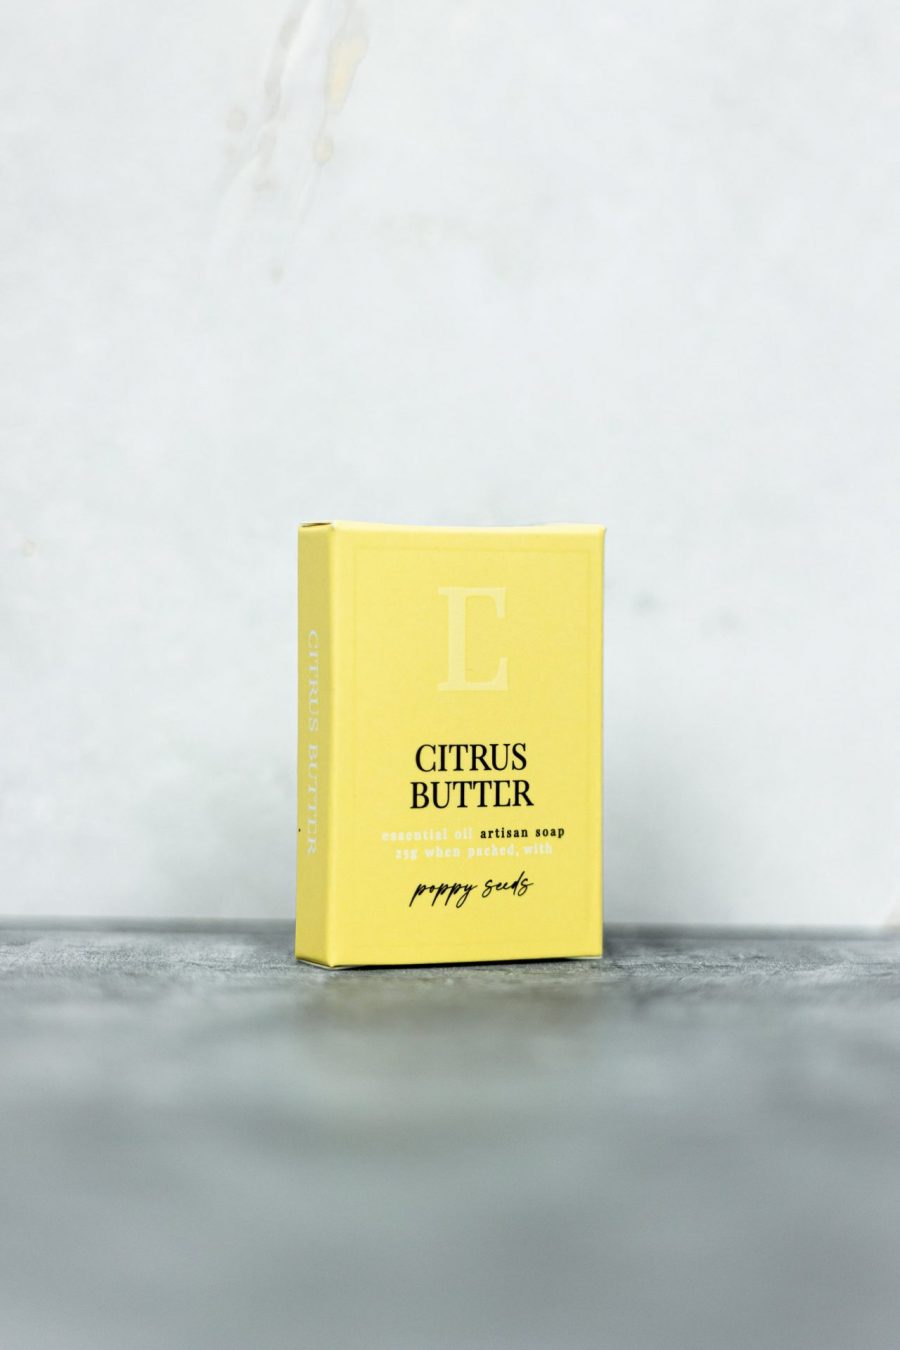 Wild Emery soap Citrus butter